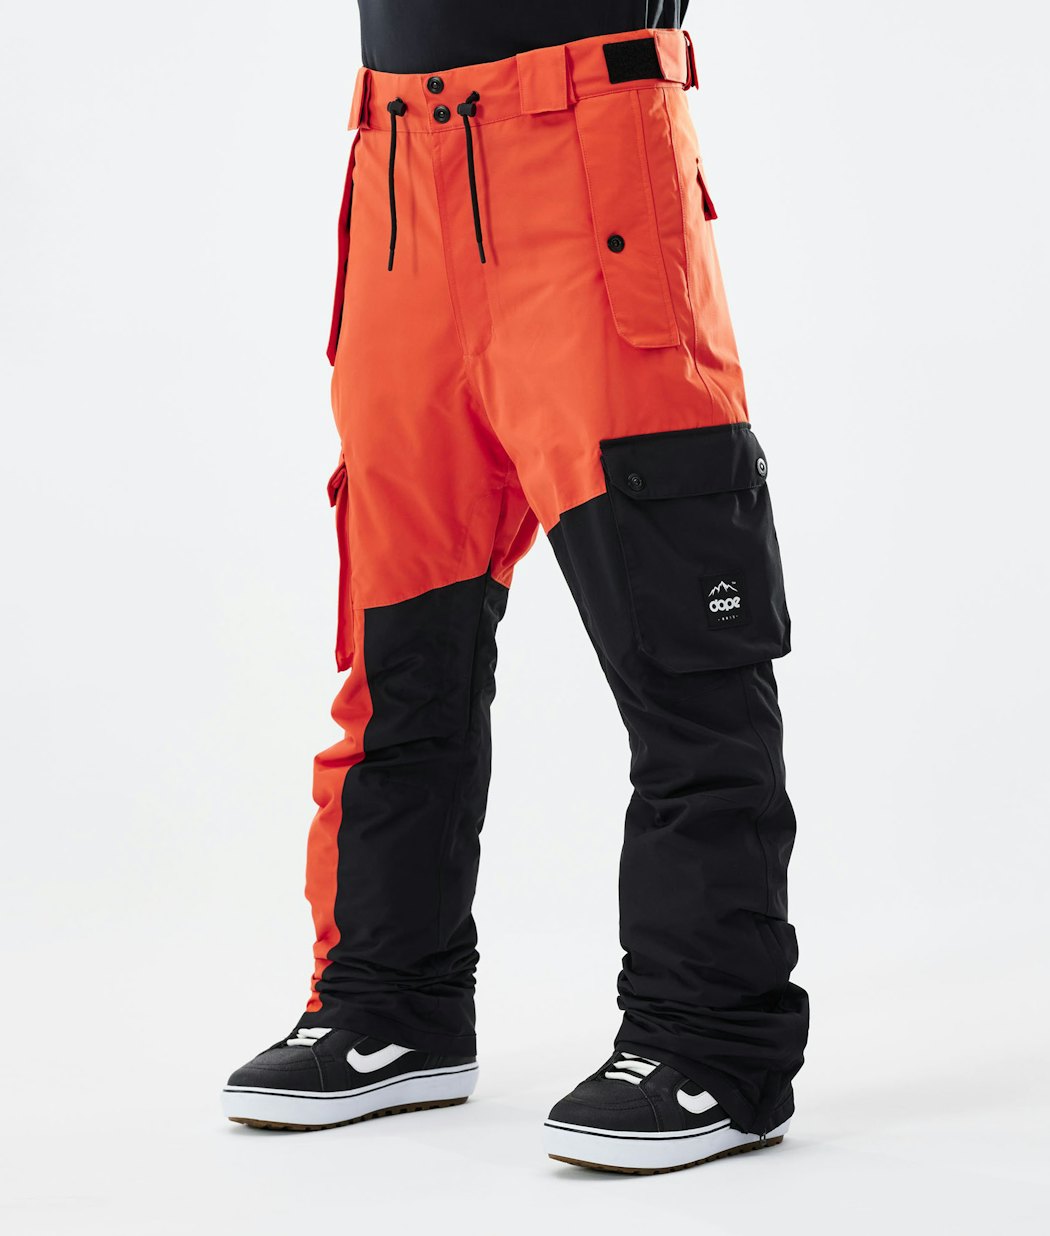 Adept 2021 Snowboard Pants Men Orange/Black